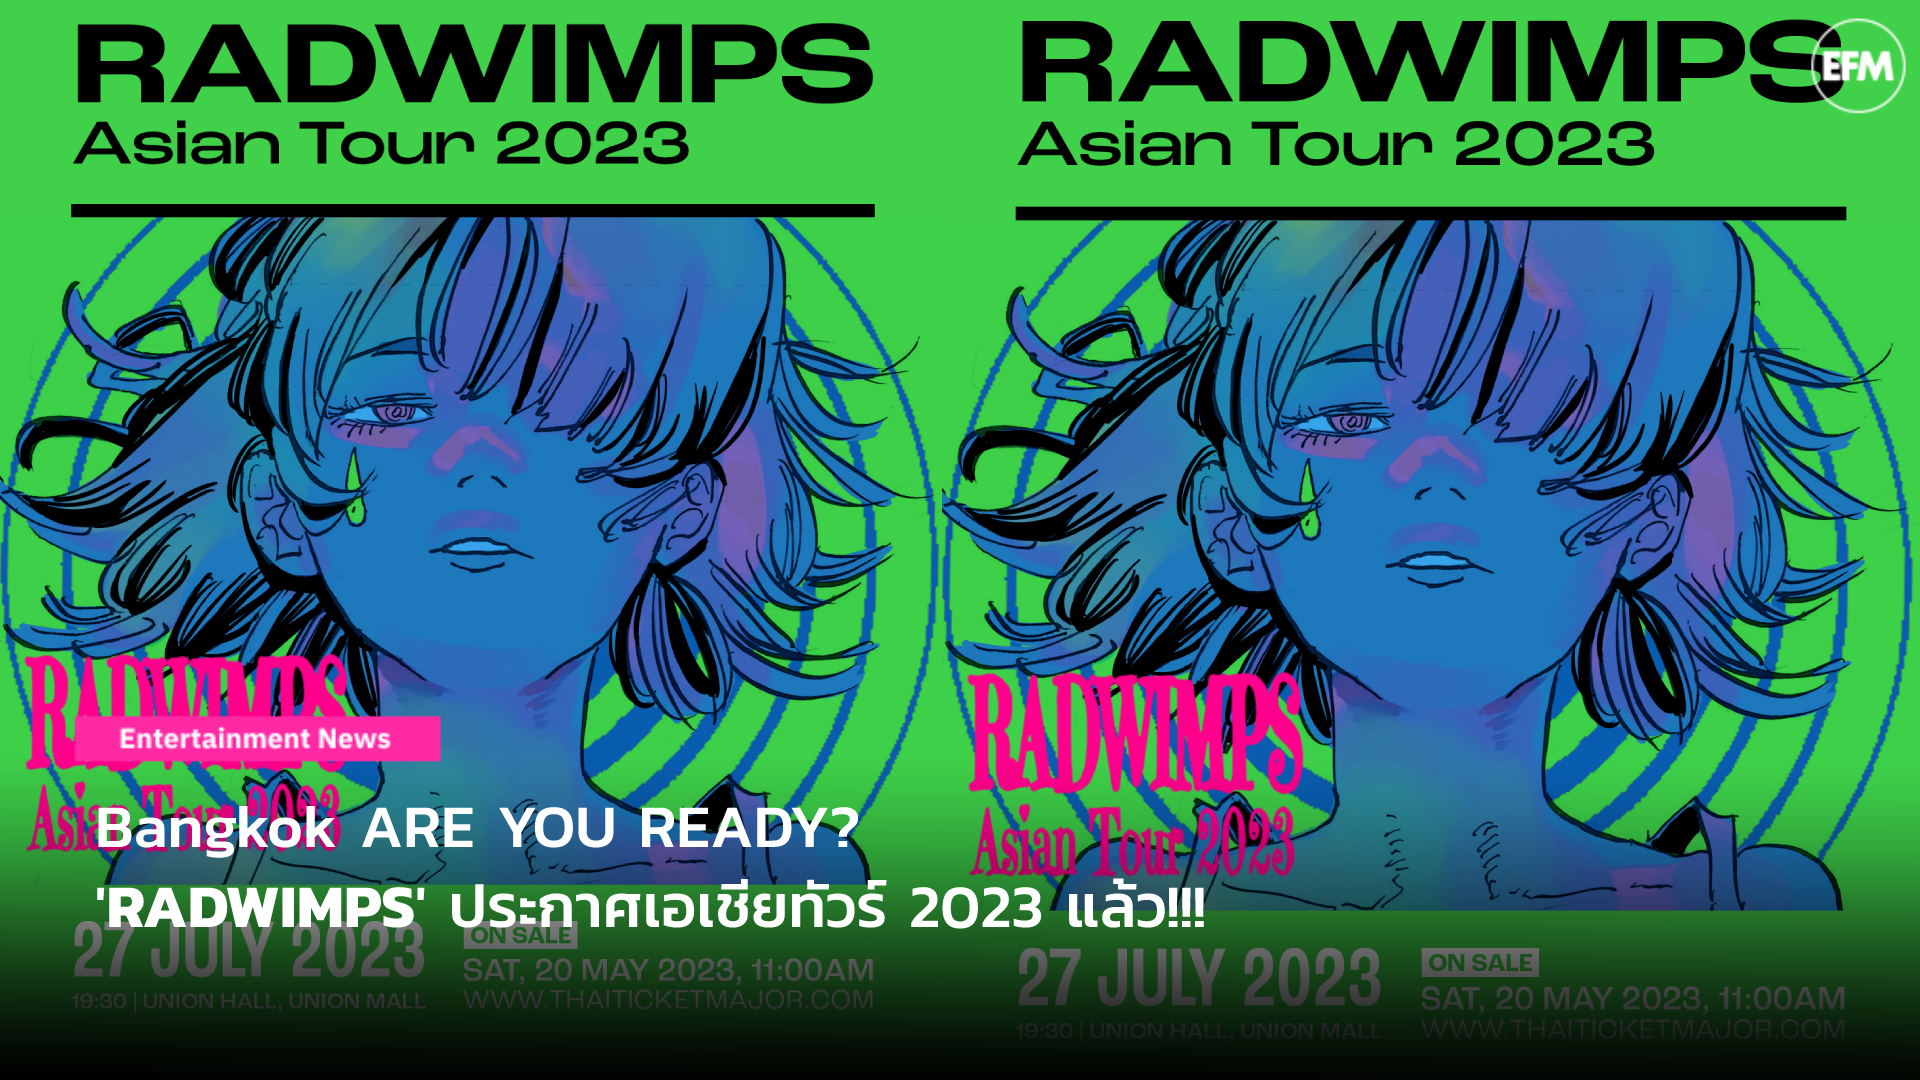 Bangkok ARE YOU READY? RADWIMPS ประกาศเอเชียทัวร์ 2023 แล้ว!!!